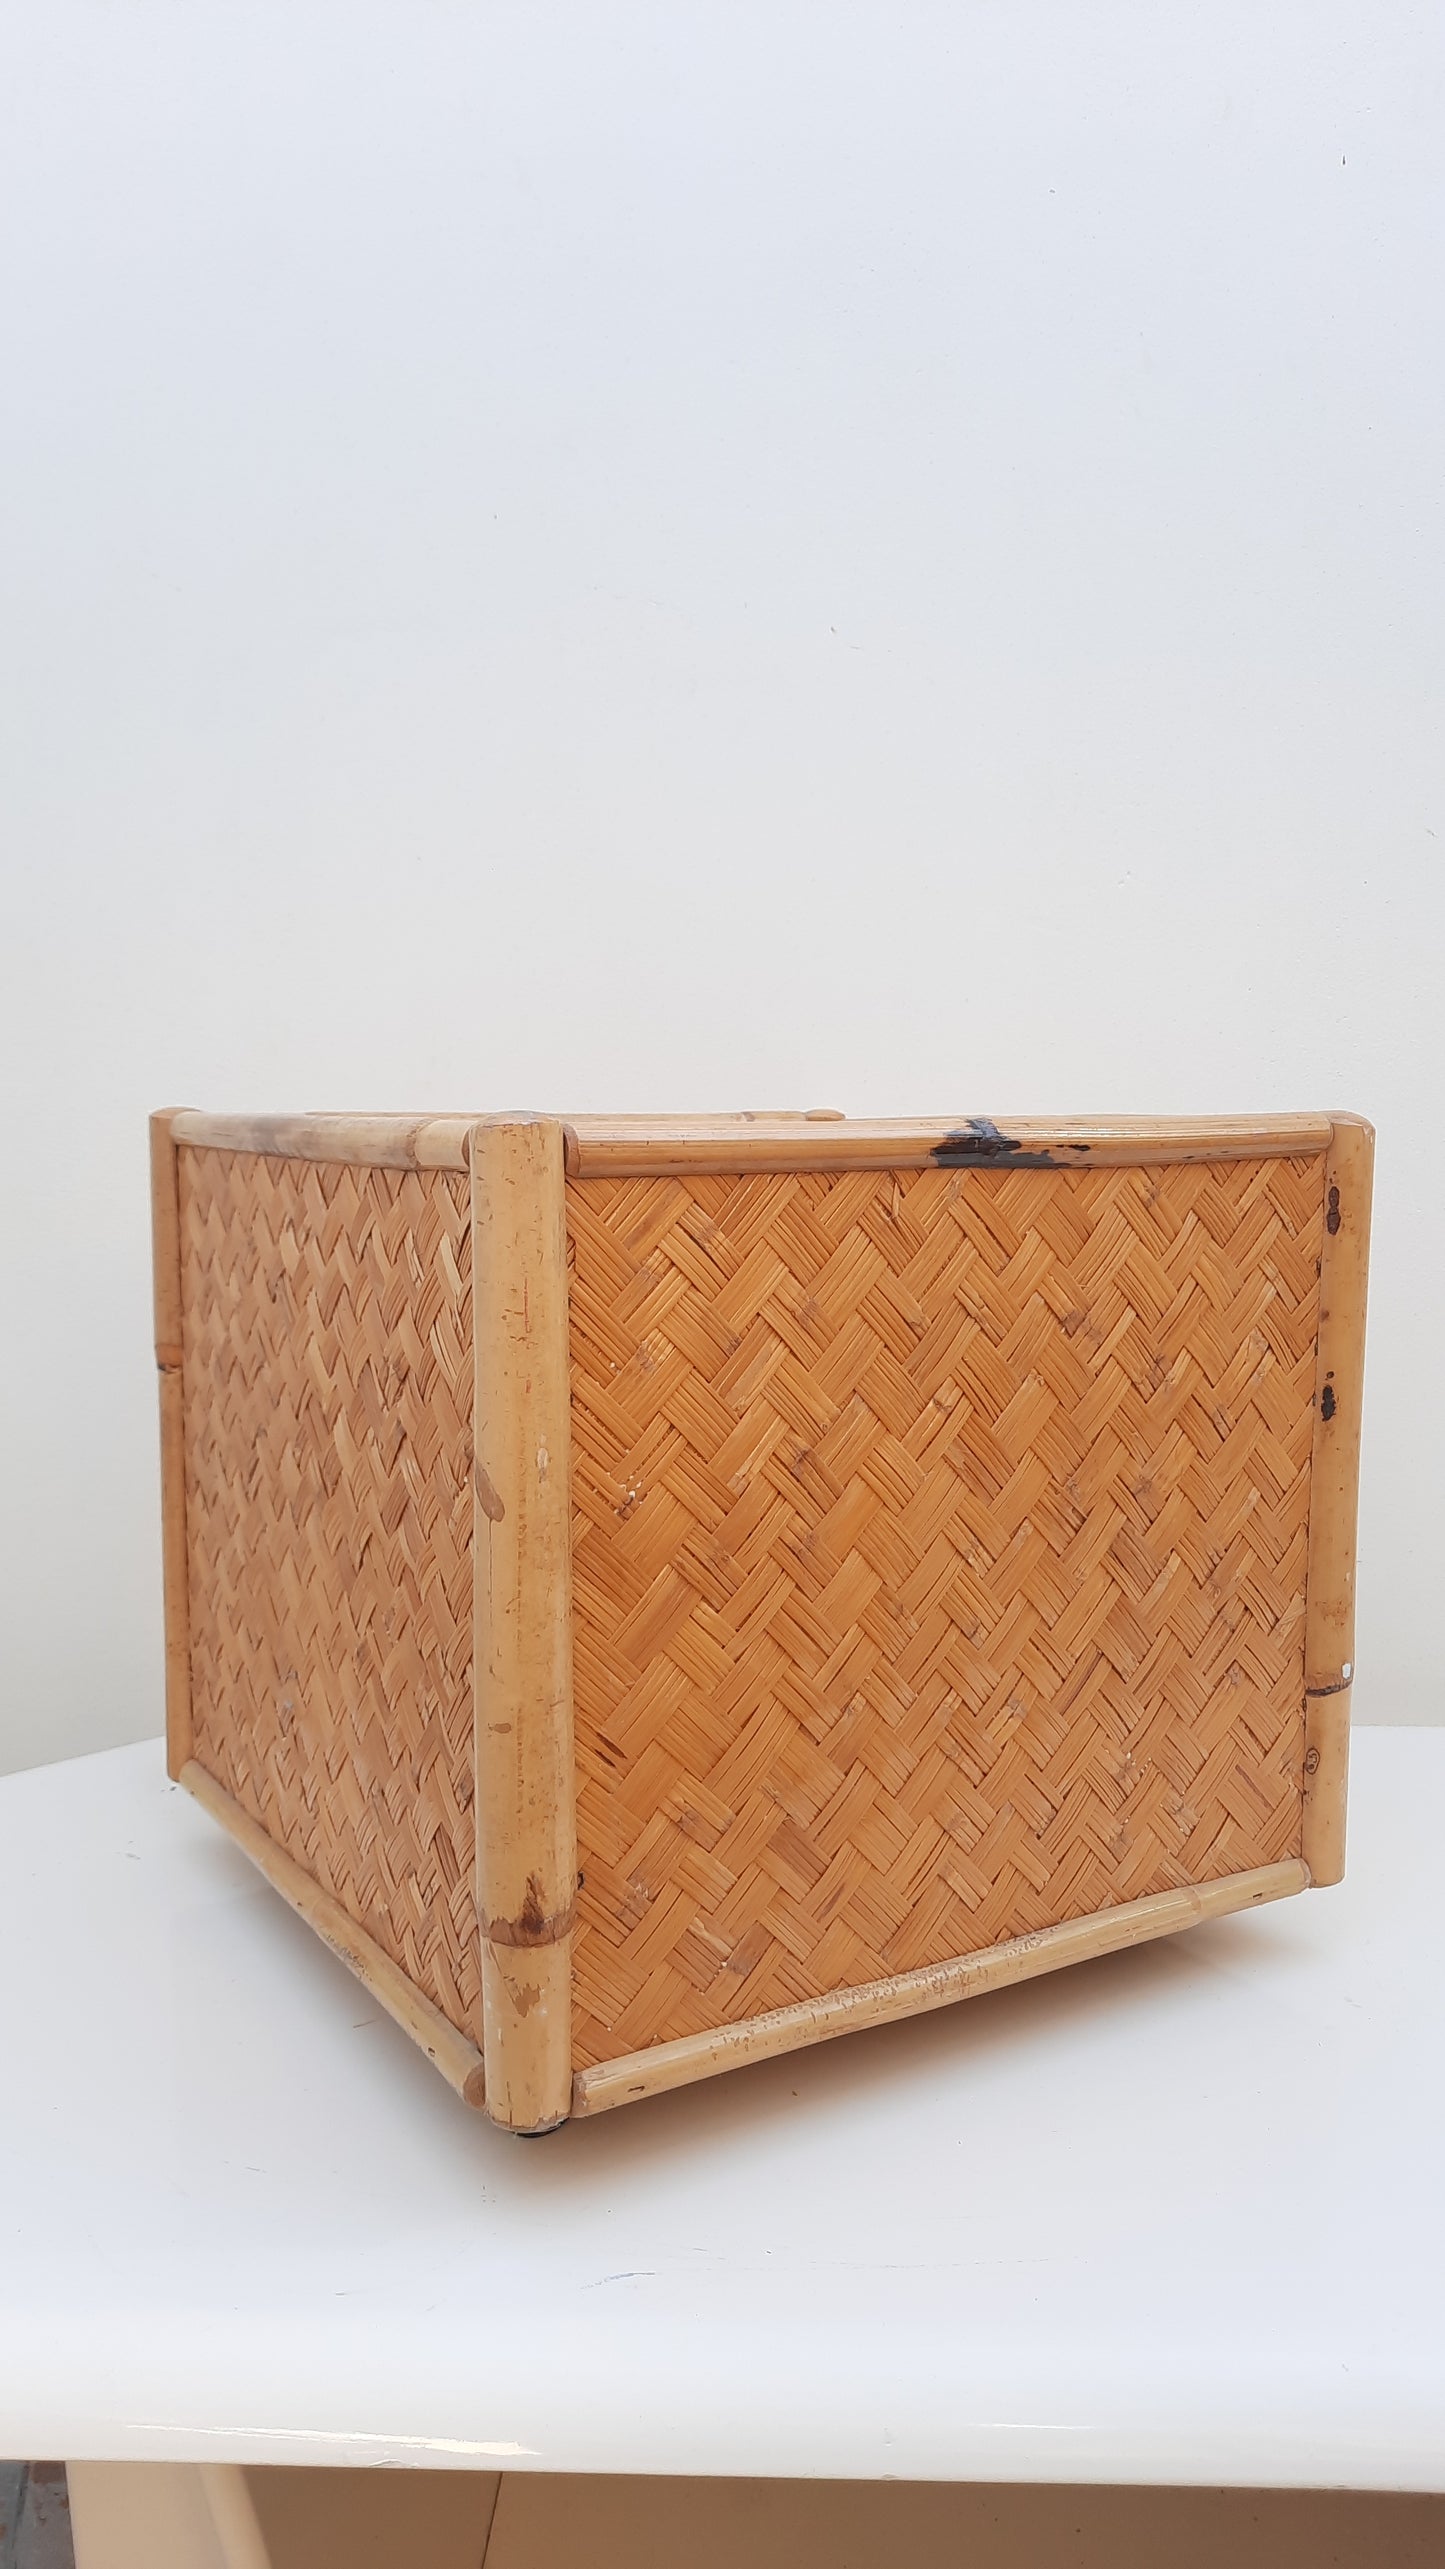 Vintage Rattan & Bamboo Planter or Storage Box On Wheels